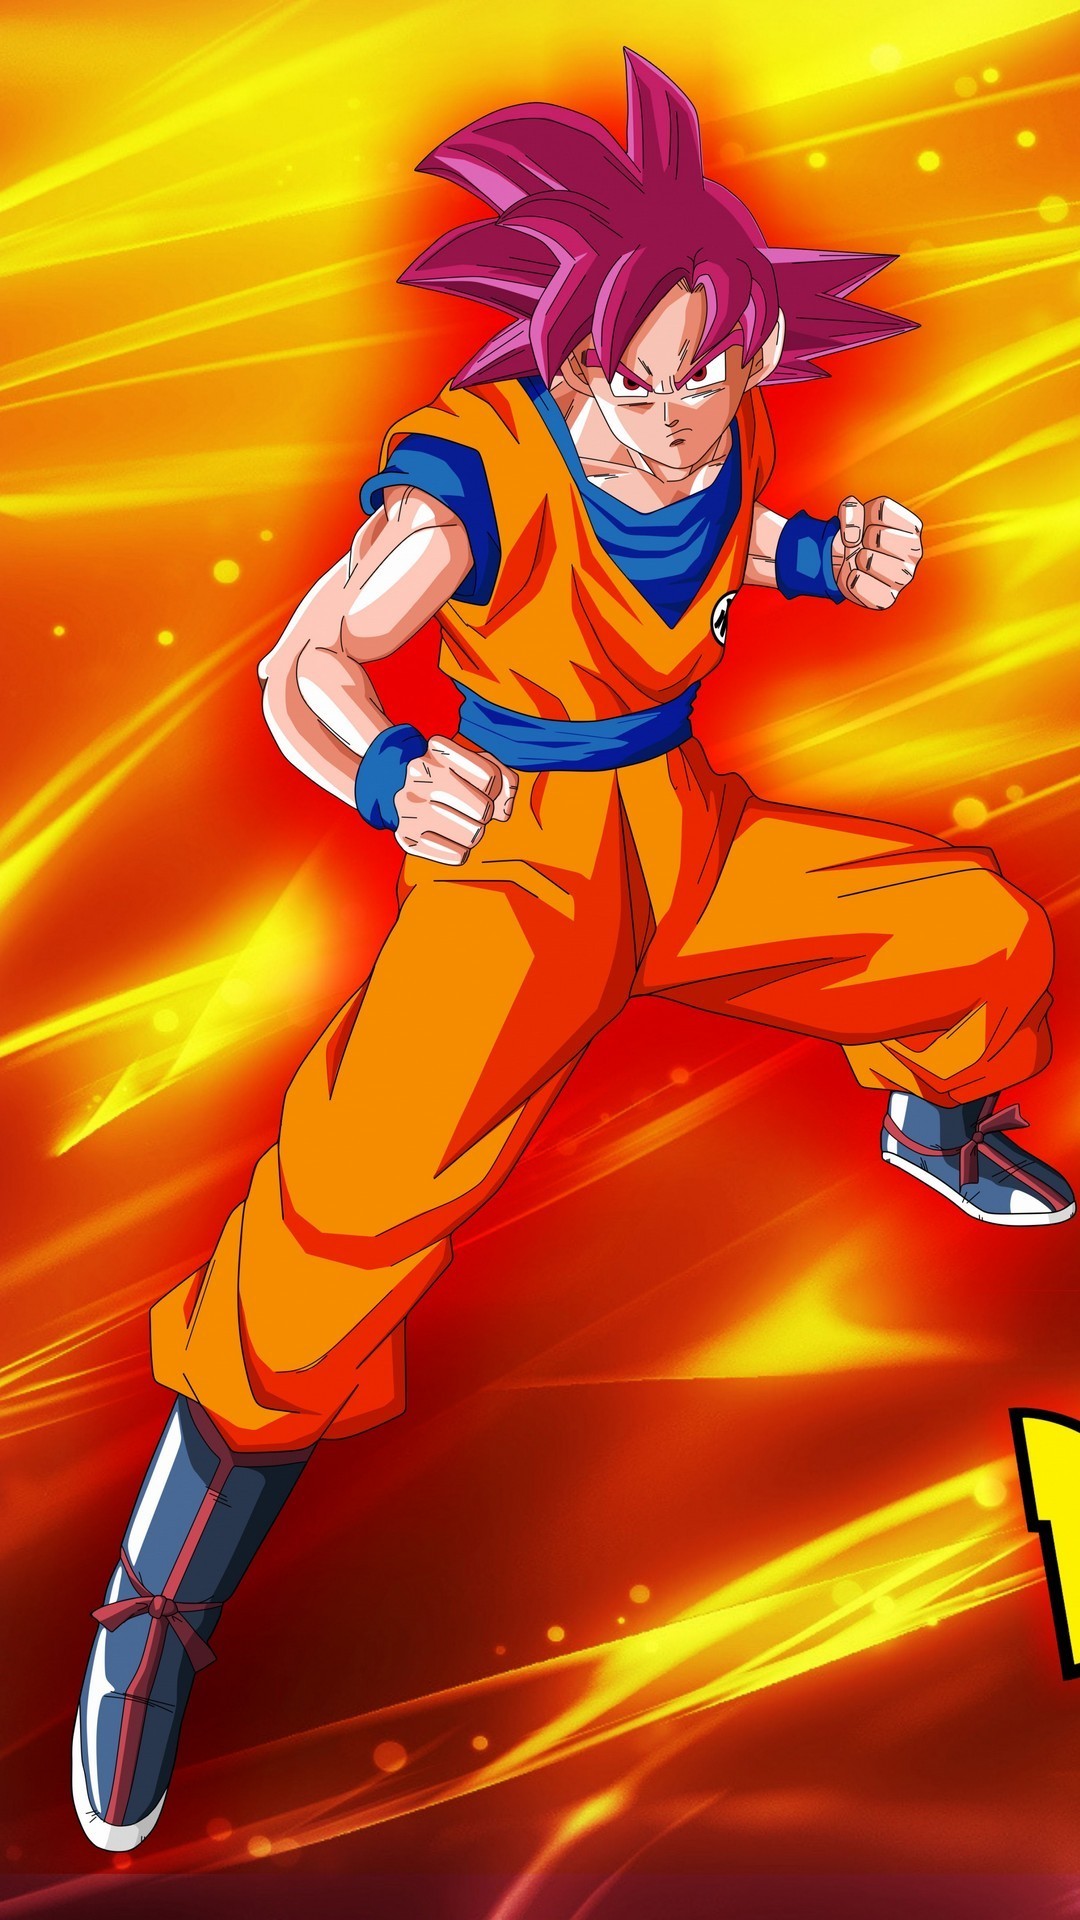 Goku Super Saiyan God Wallpaper Android with HD resolution 1080x1920